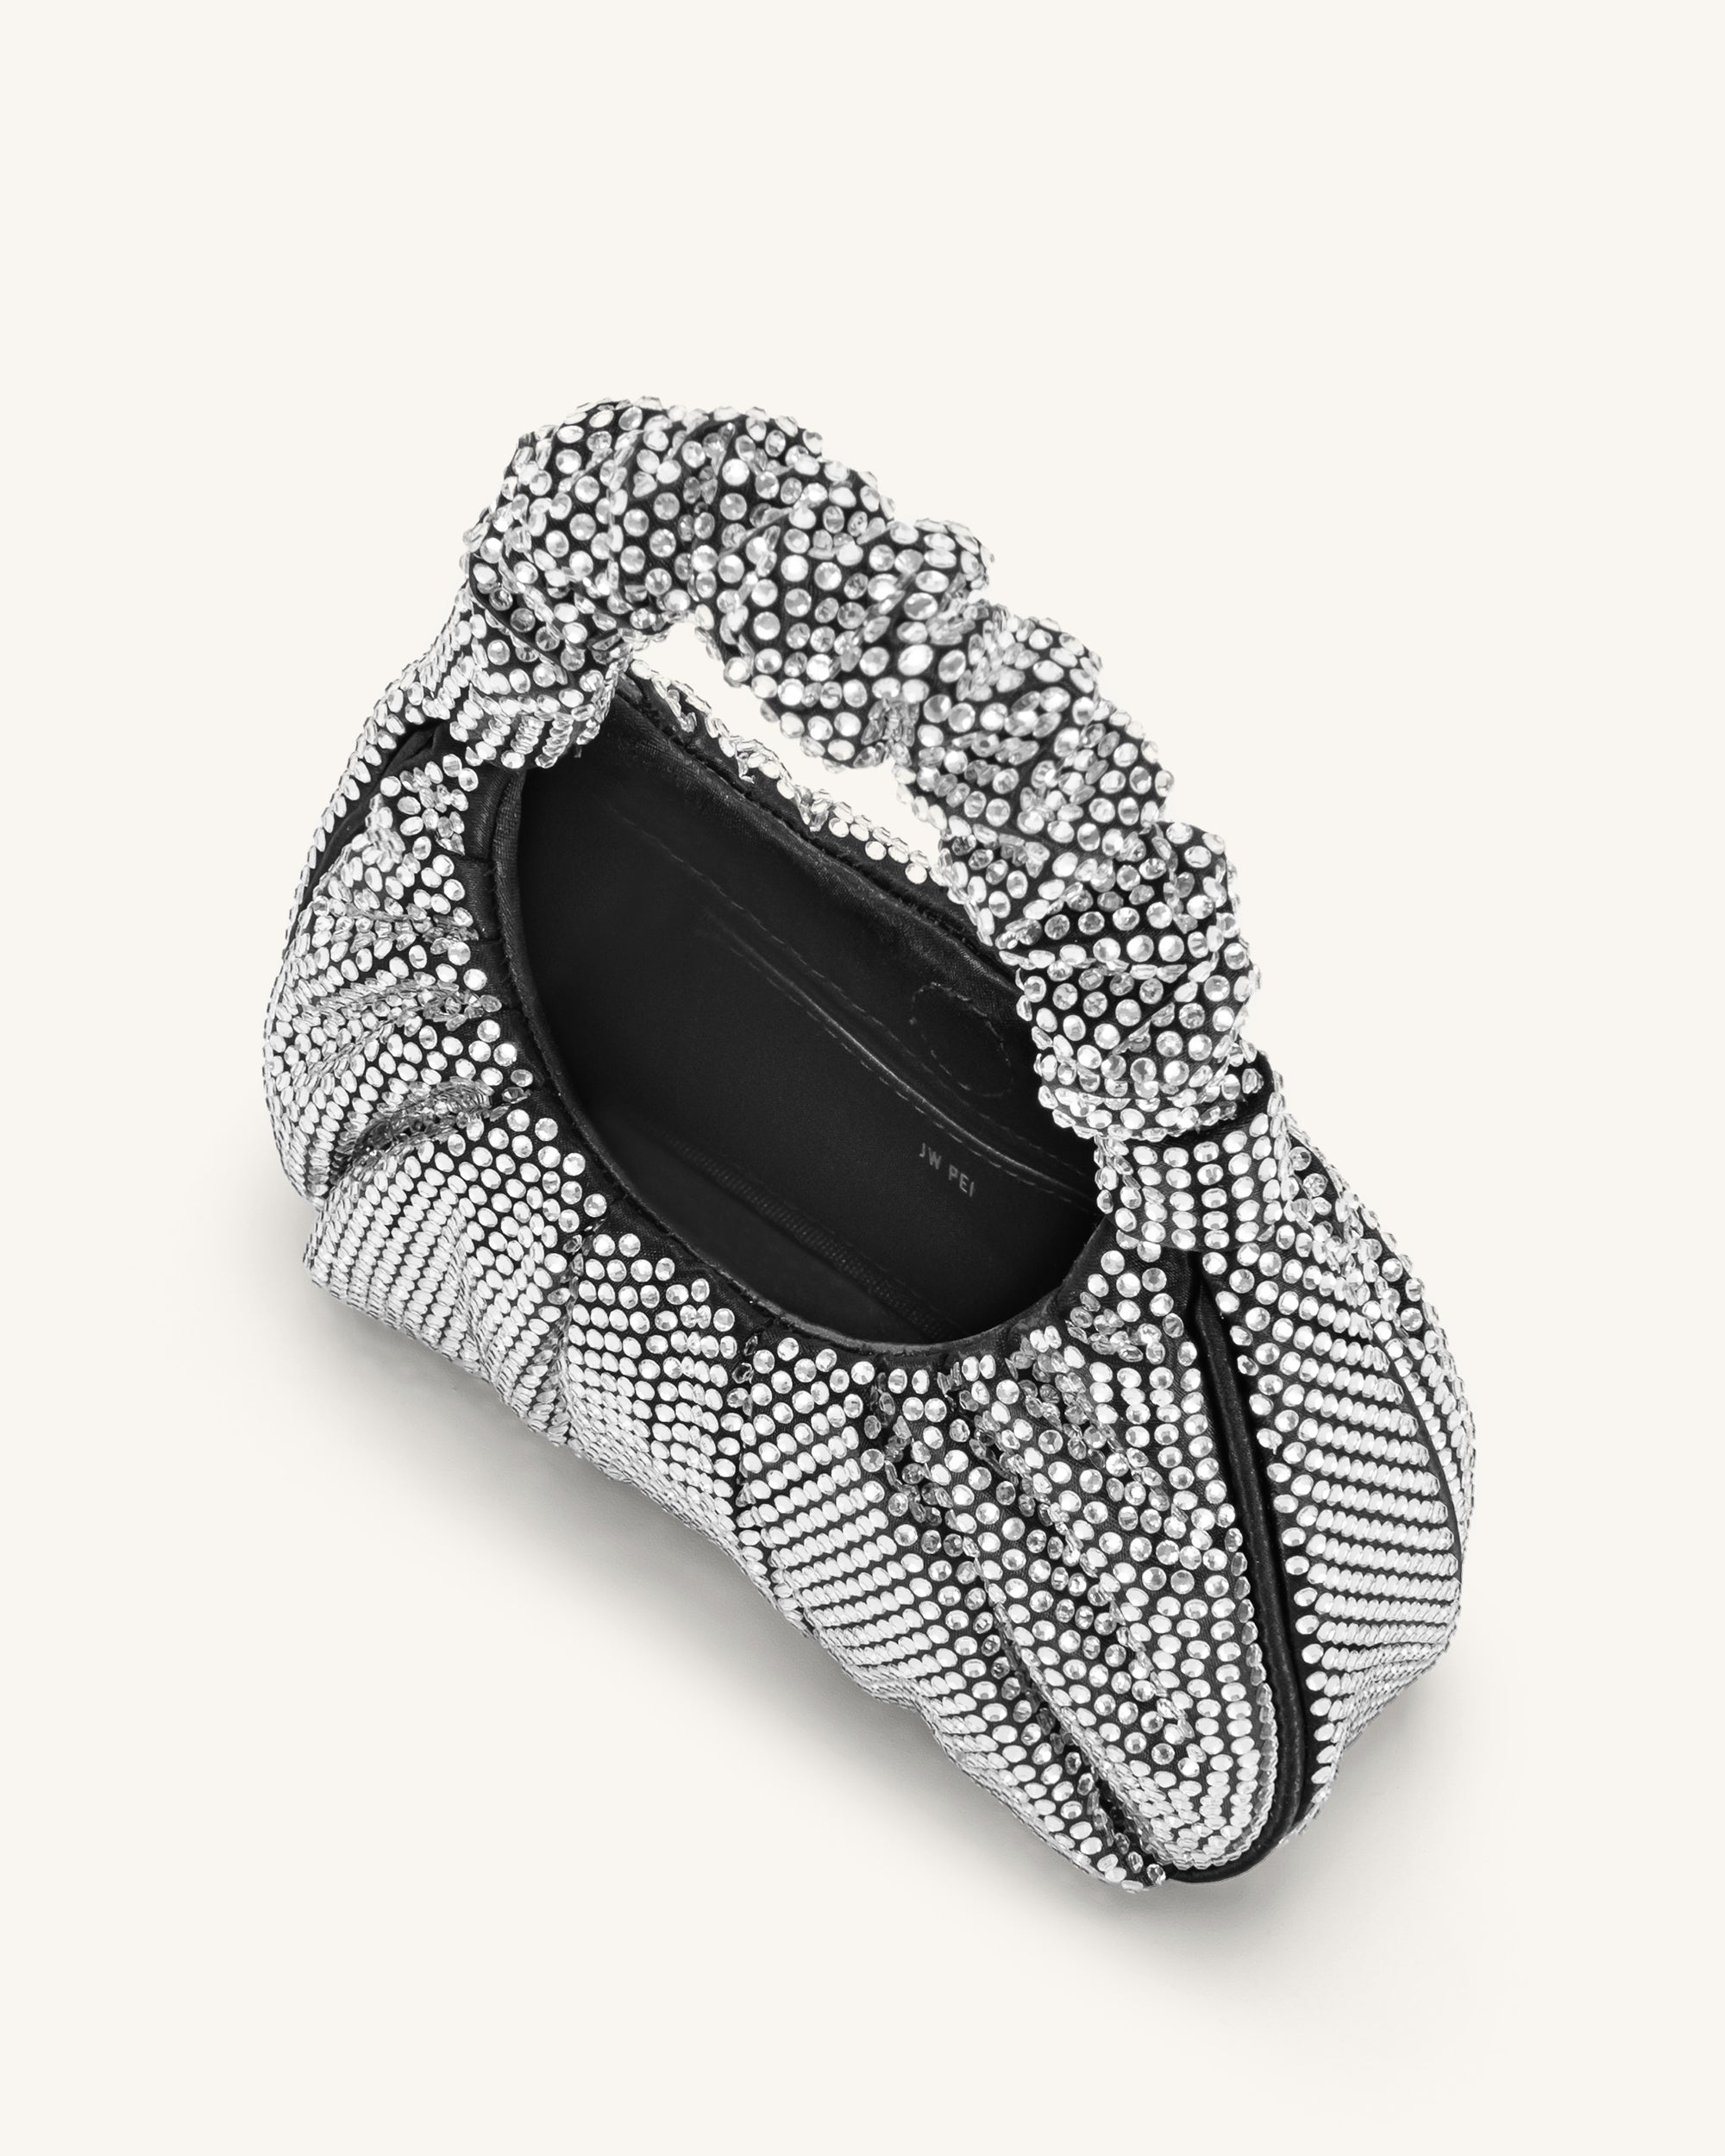 Gabbi Artificial Crystal Medium Ruched Hobo Handbag - Black - JW PEI